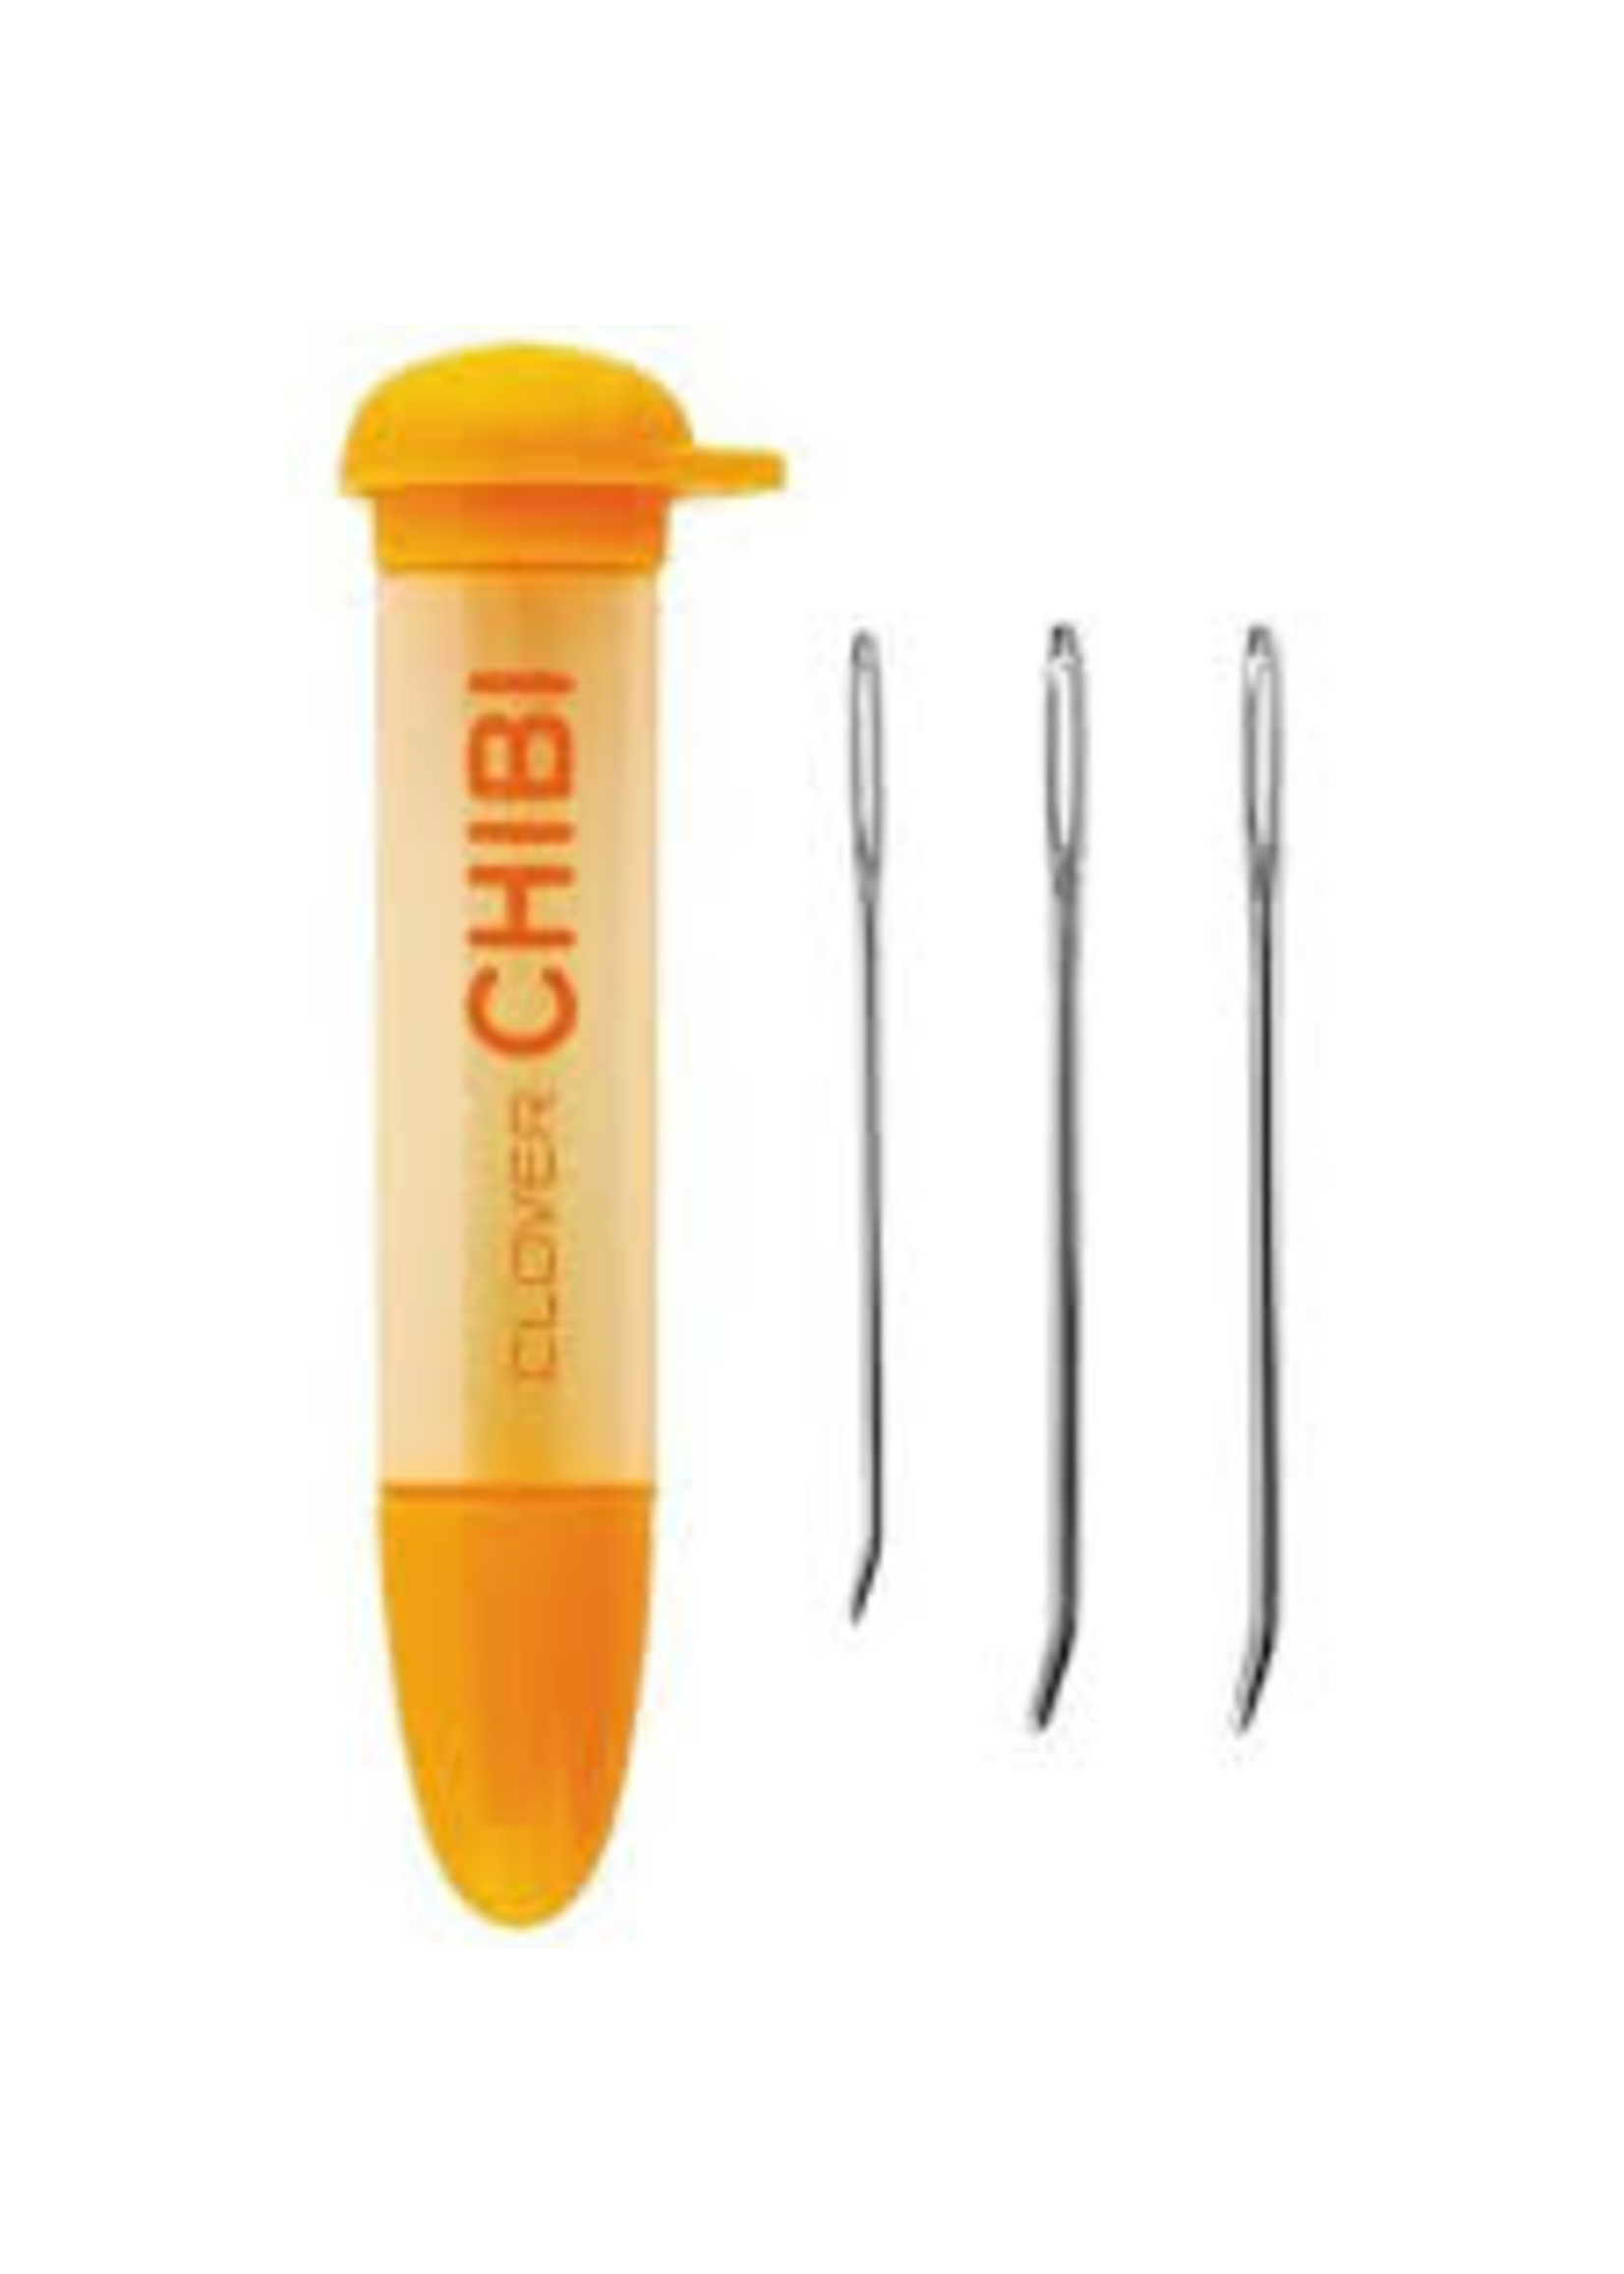 Clover Chibi Small Darning Needle Set